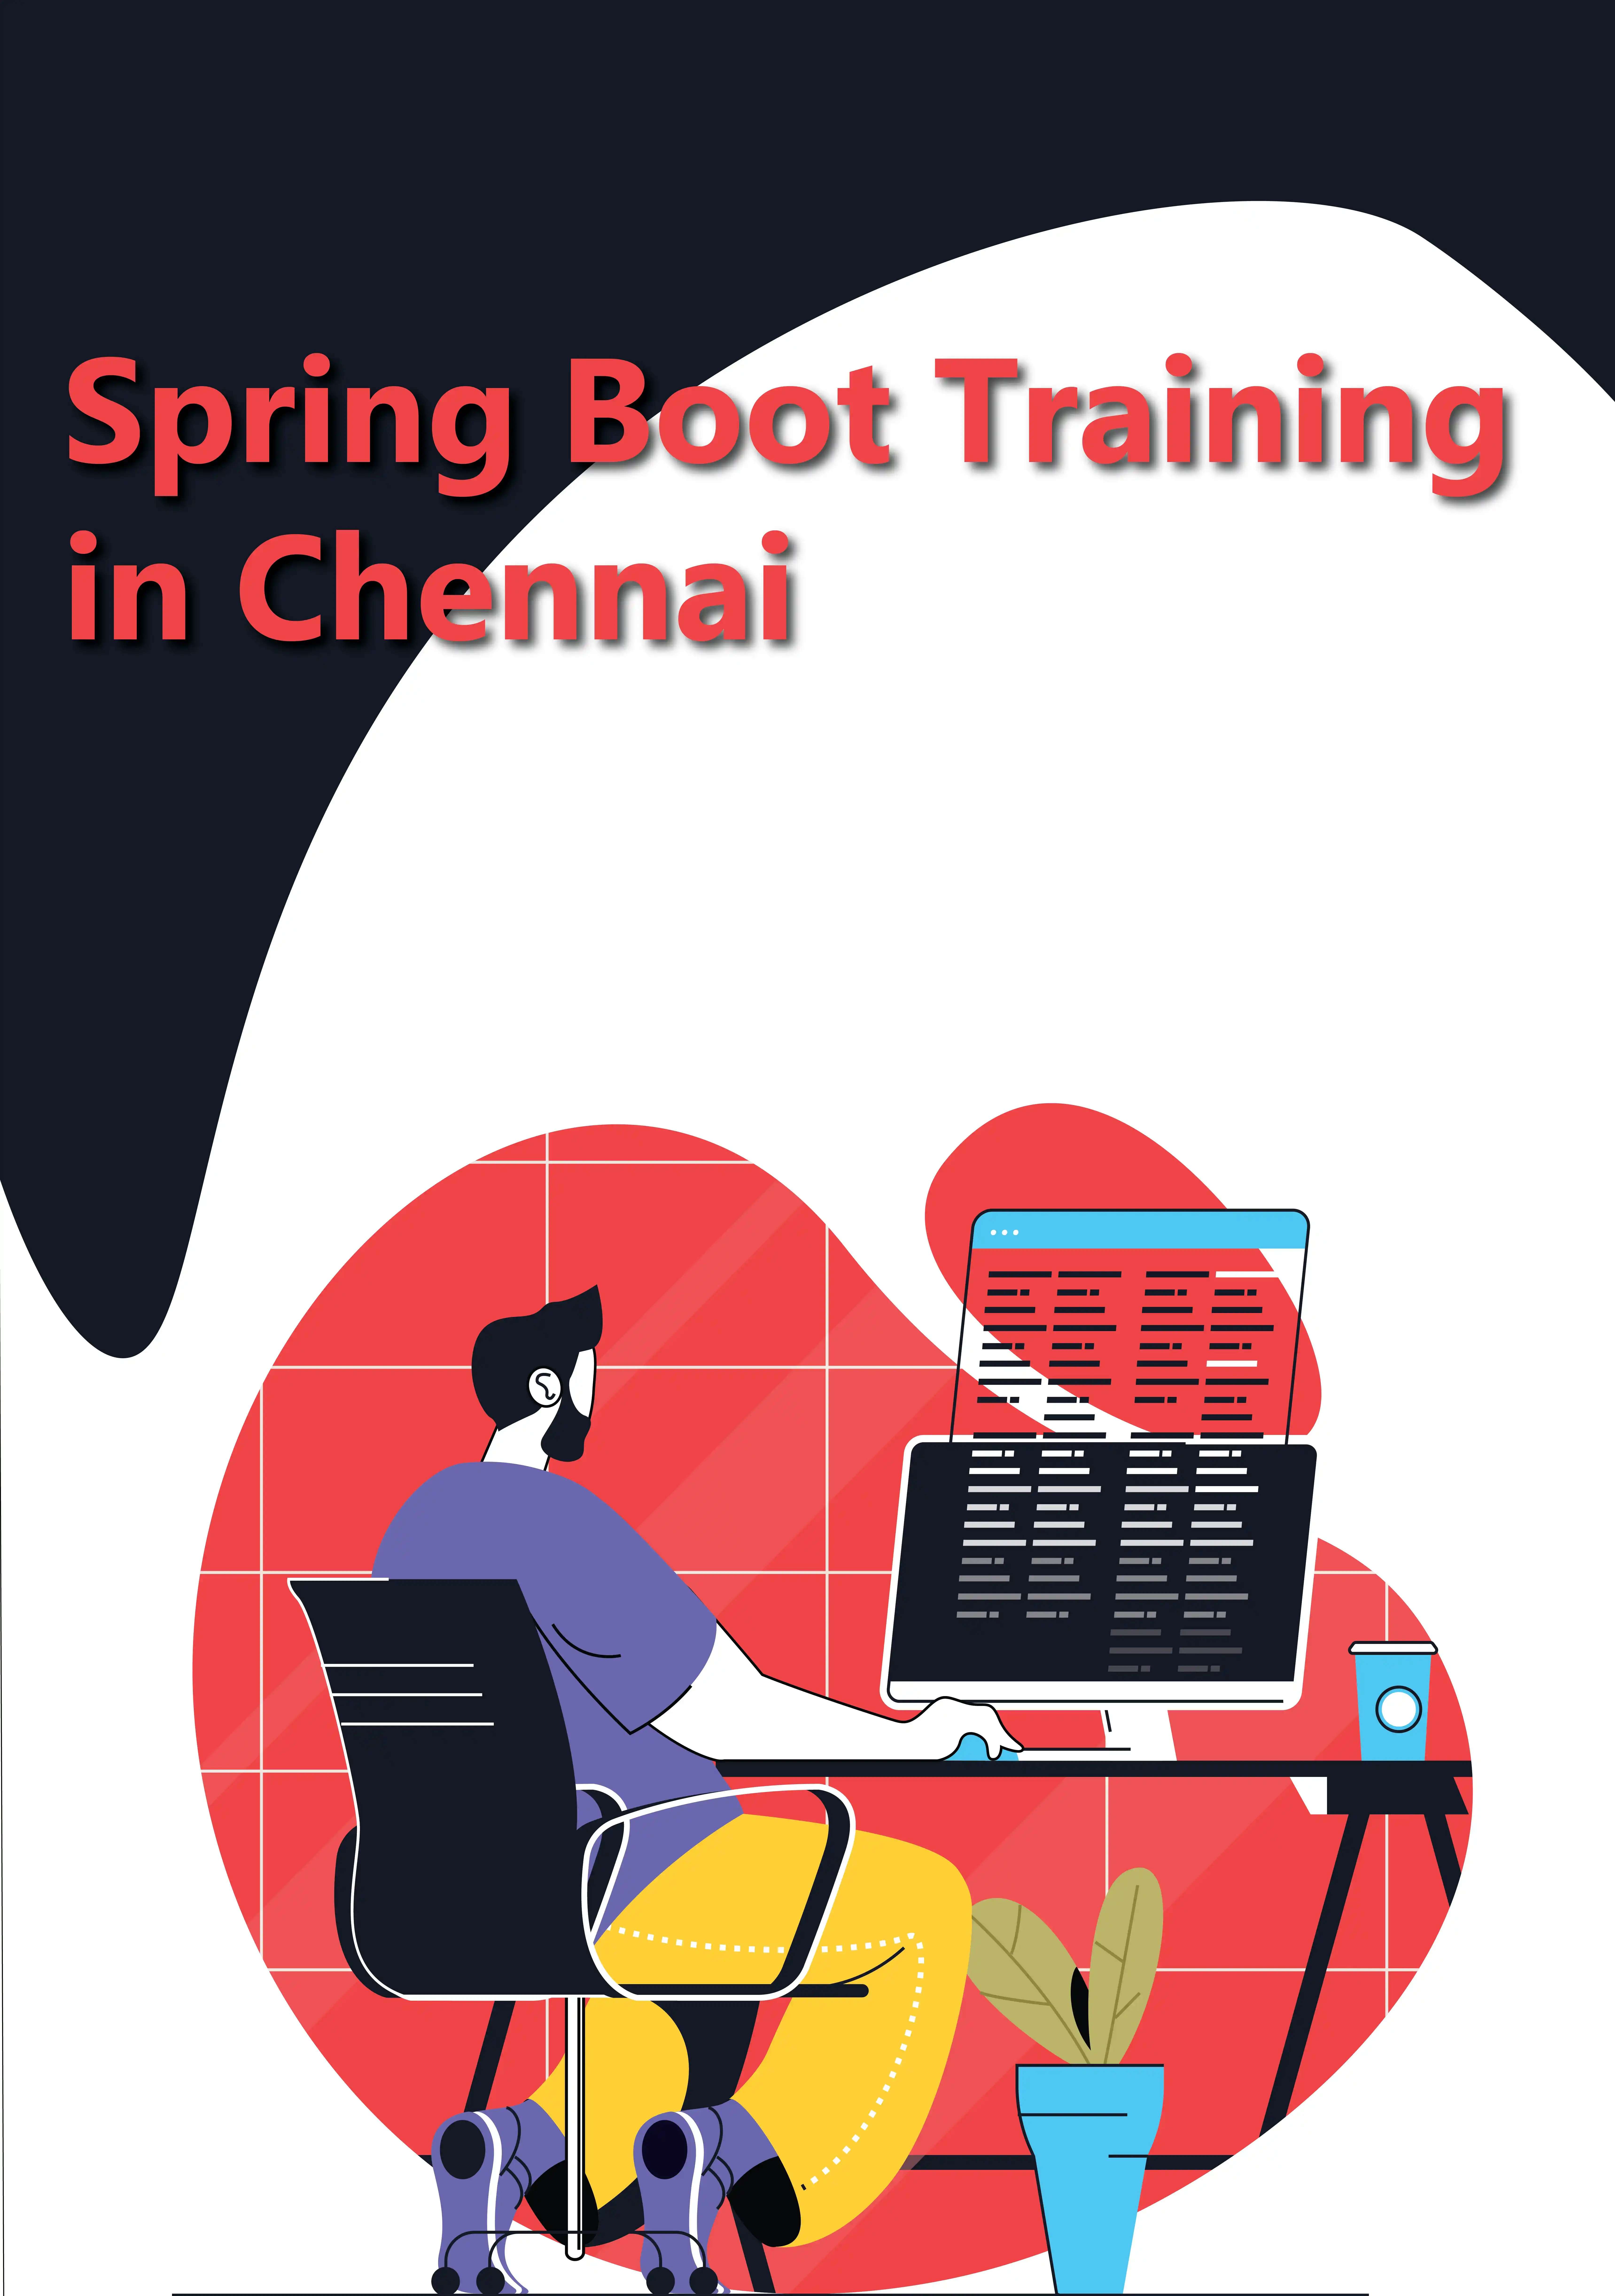 Spring Boot Training in Chennai